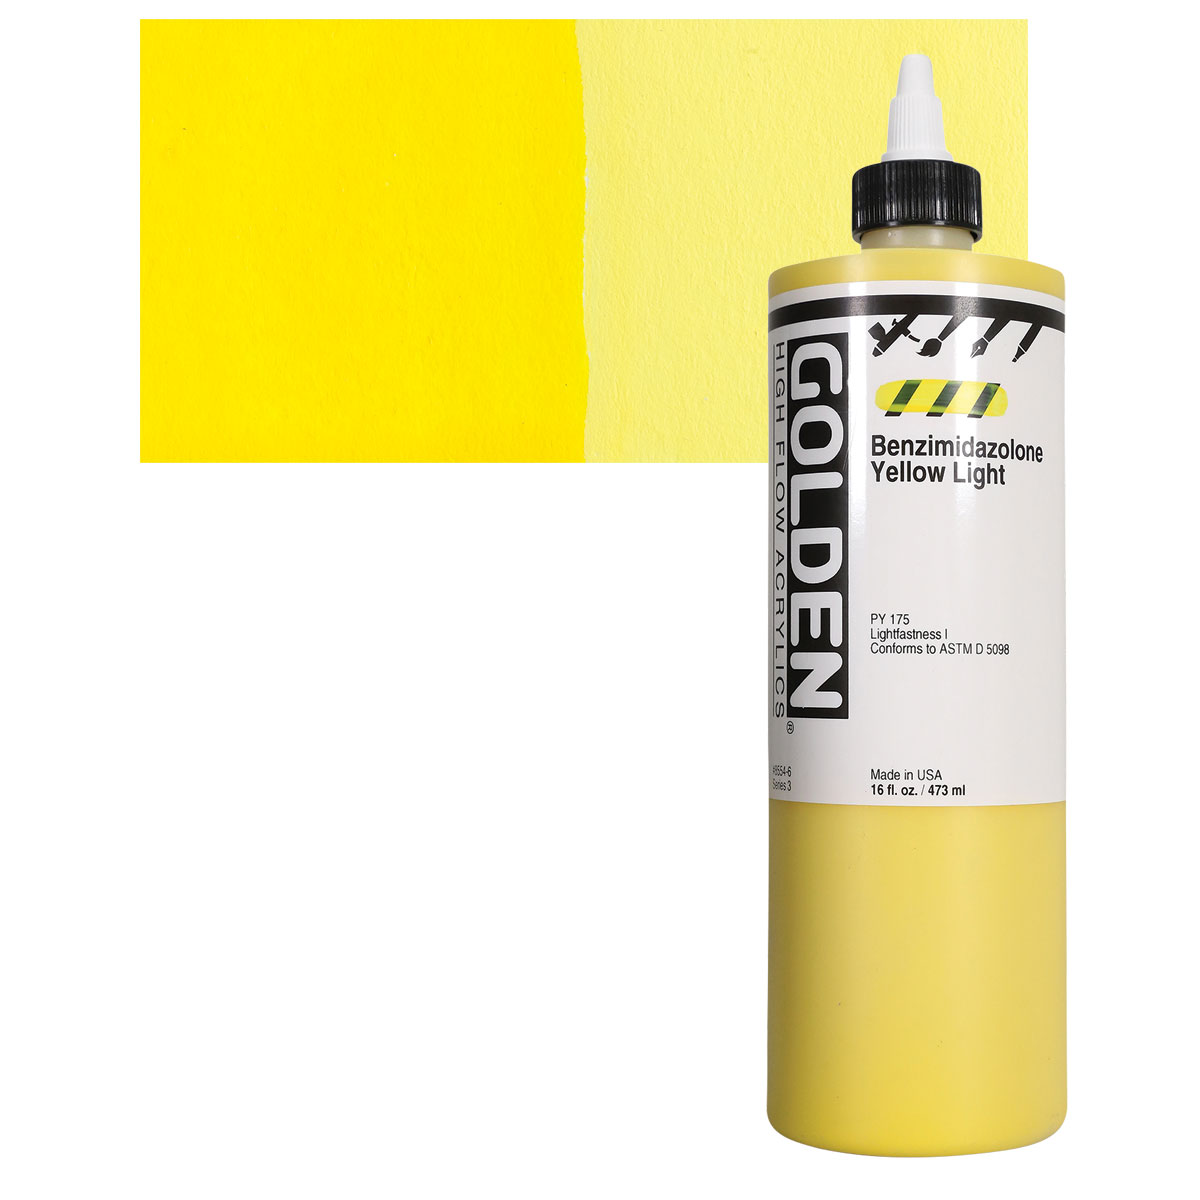 Golden : High Flow : Acrylic Paint : 473ml (16oz) : Fluorescent Orange -  Golden : High Flow - Golden - Brands